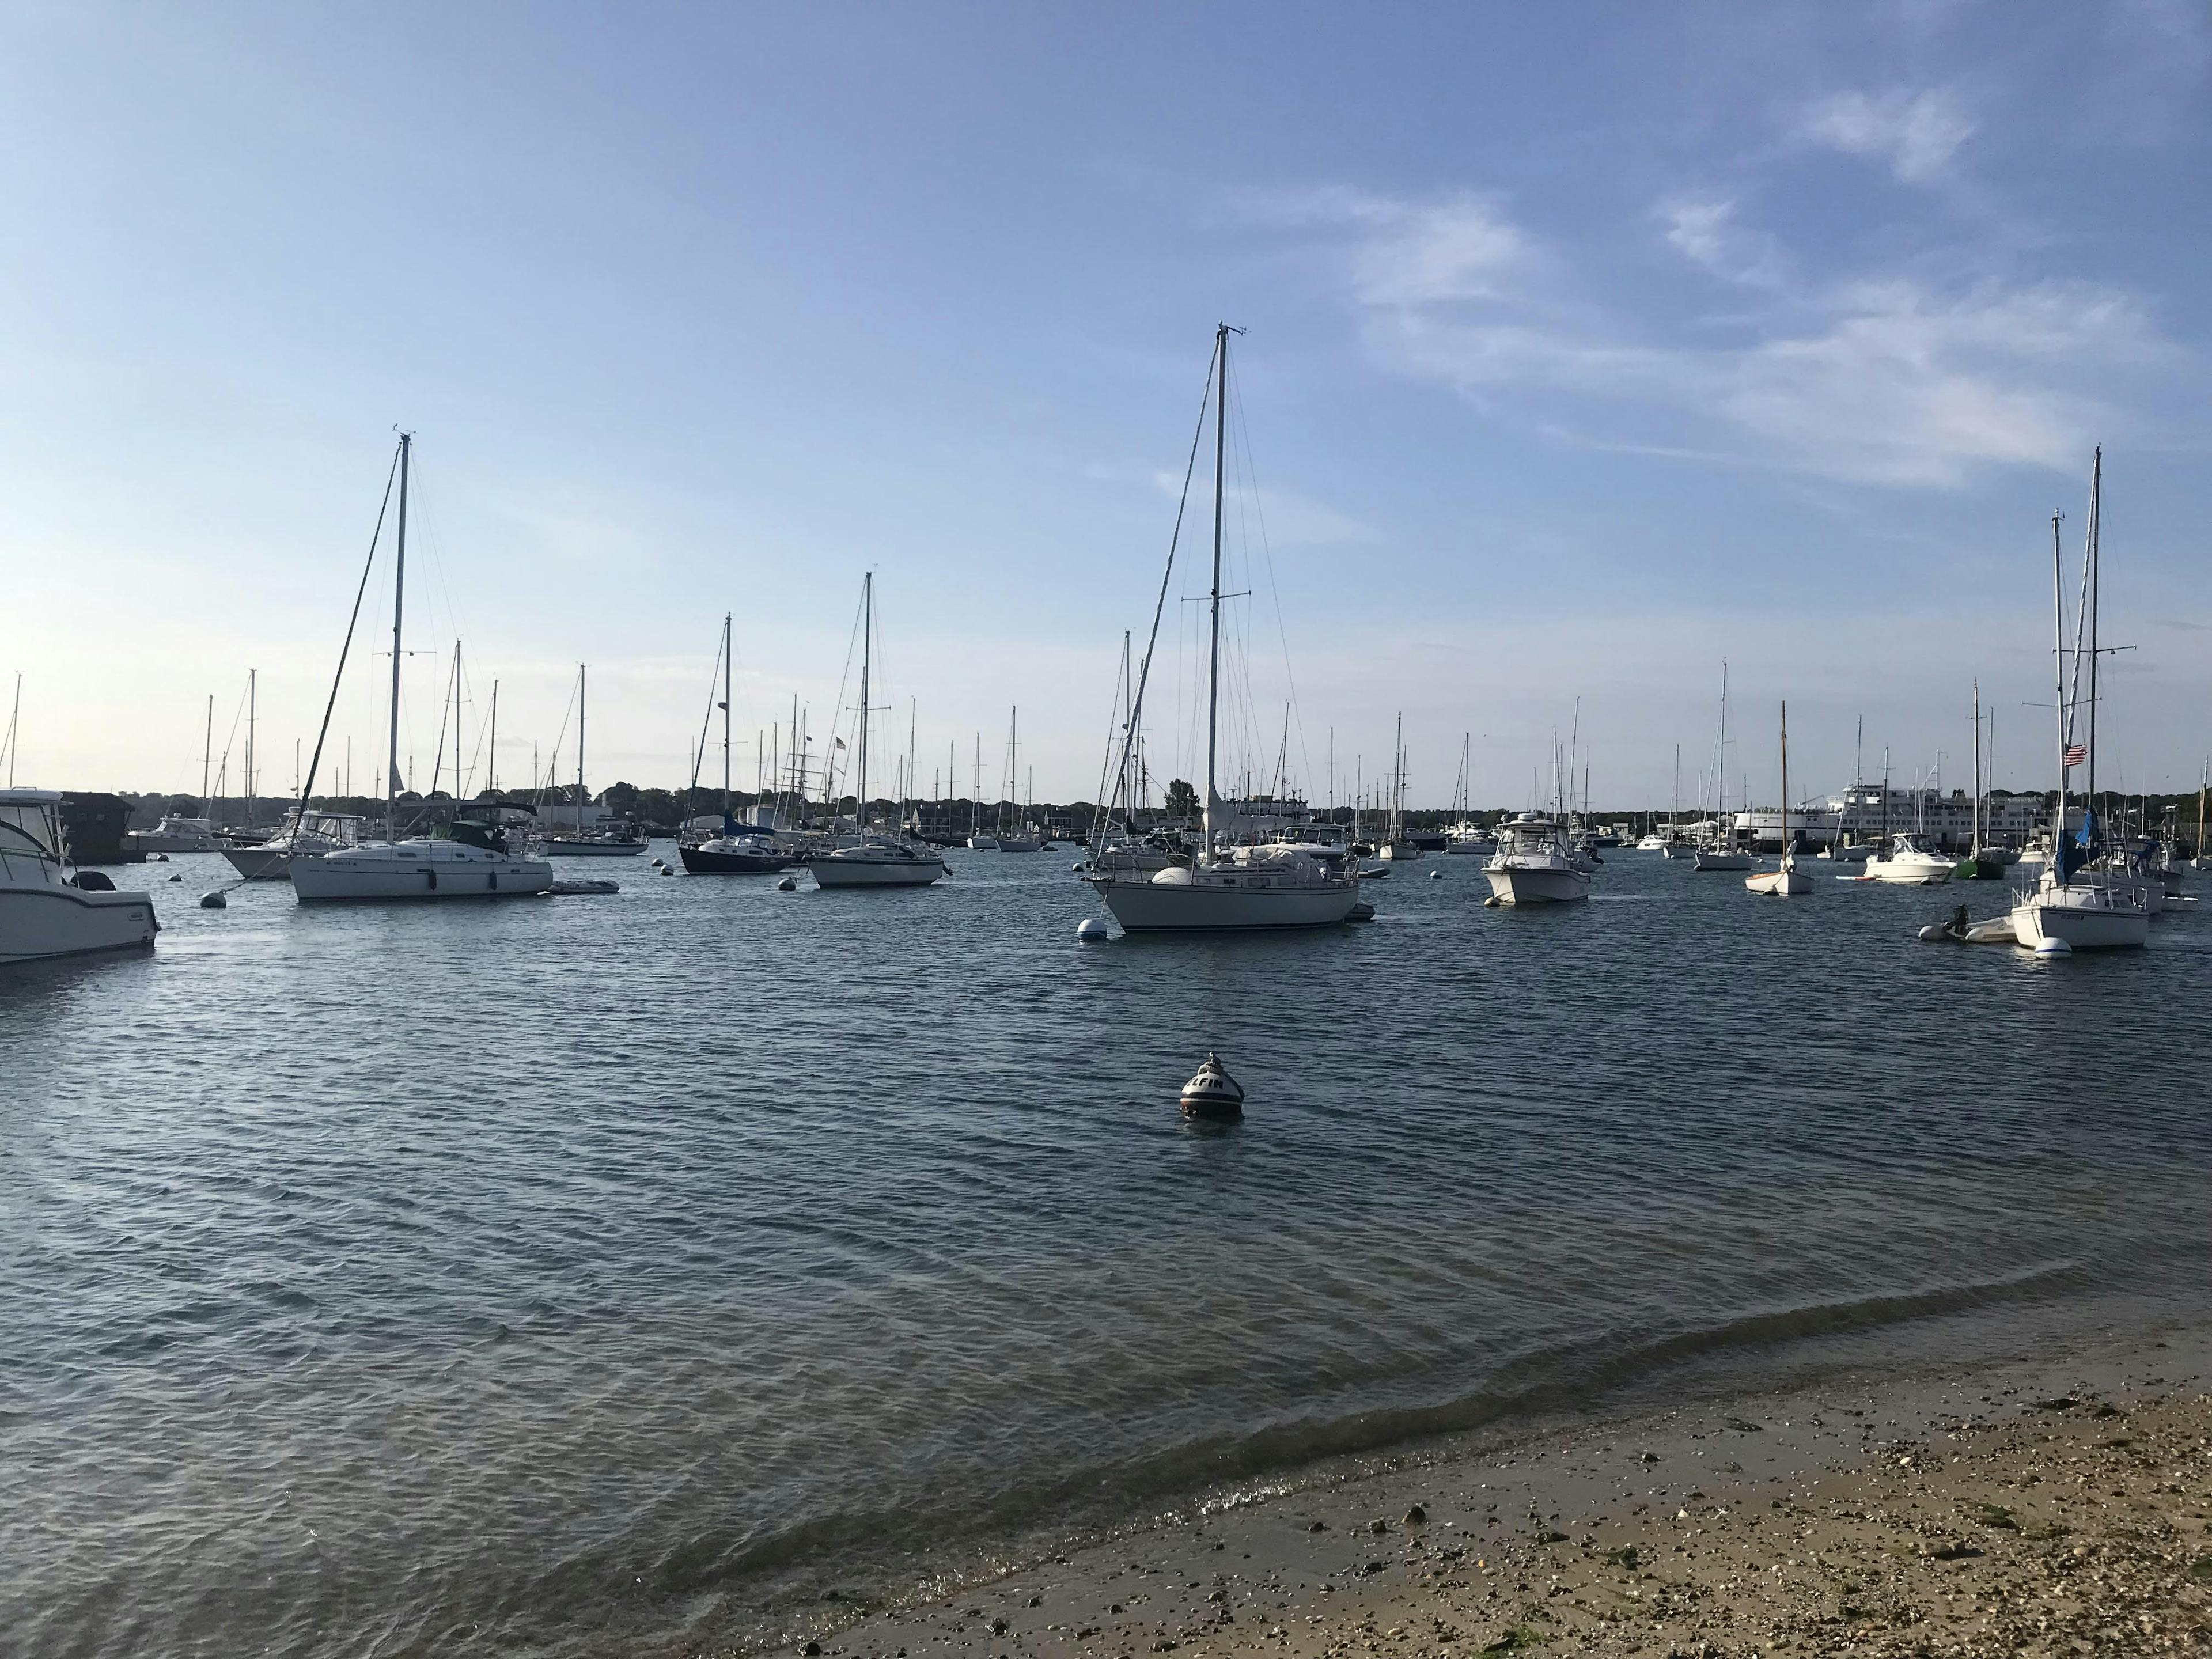 Boats on Vineyard Haven harbor